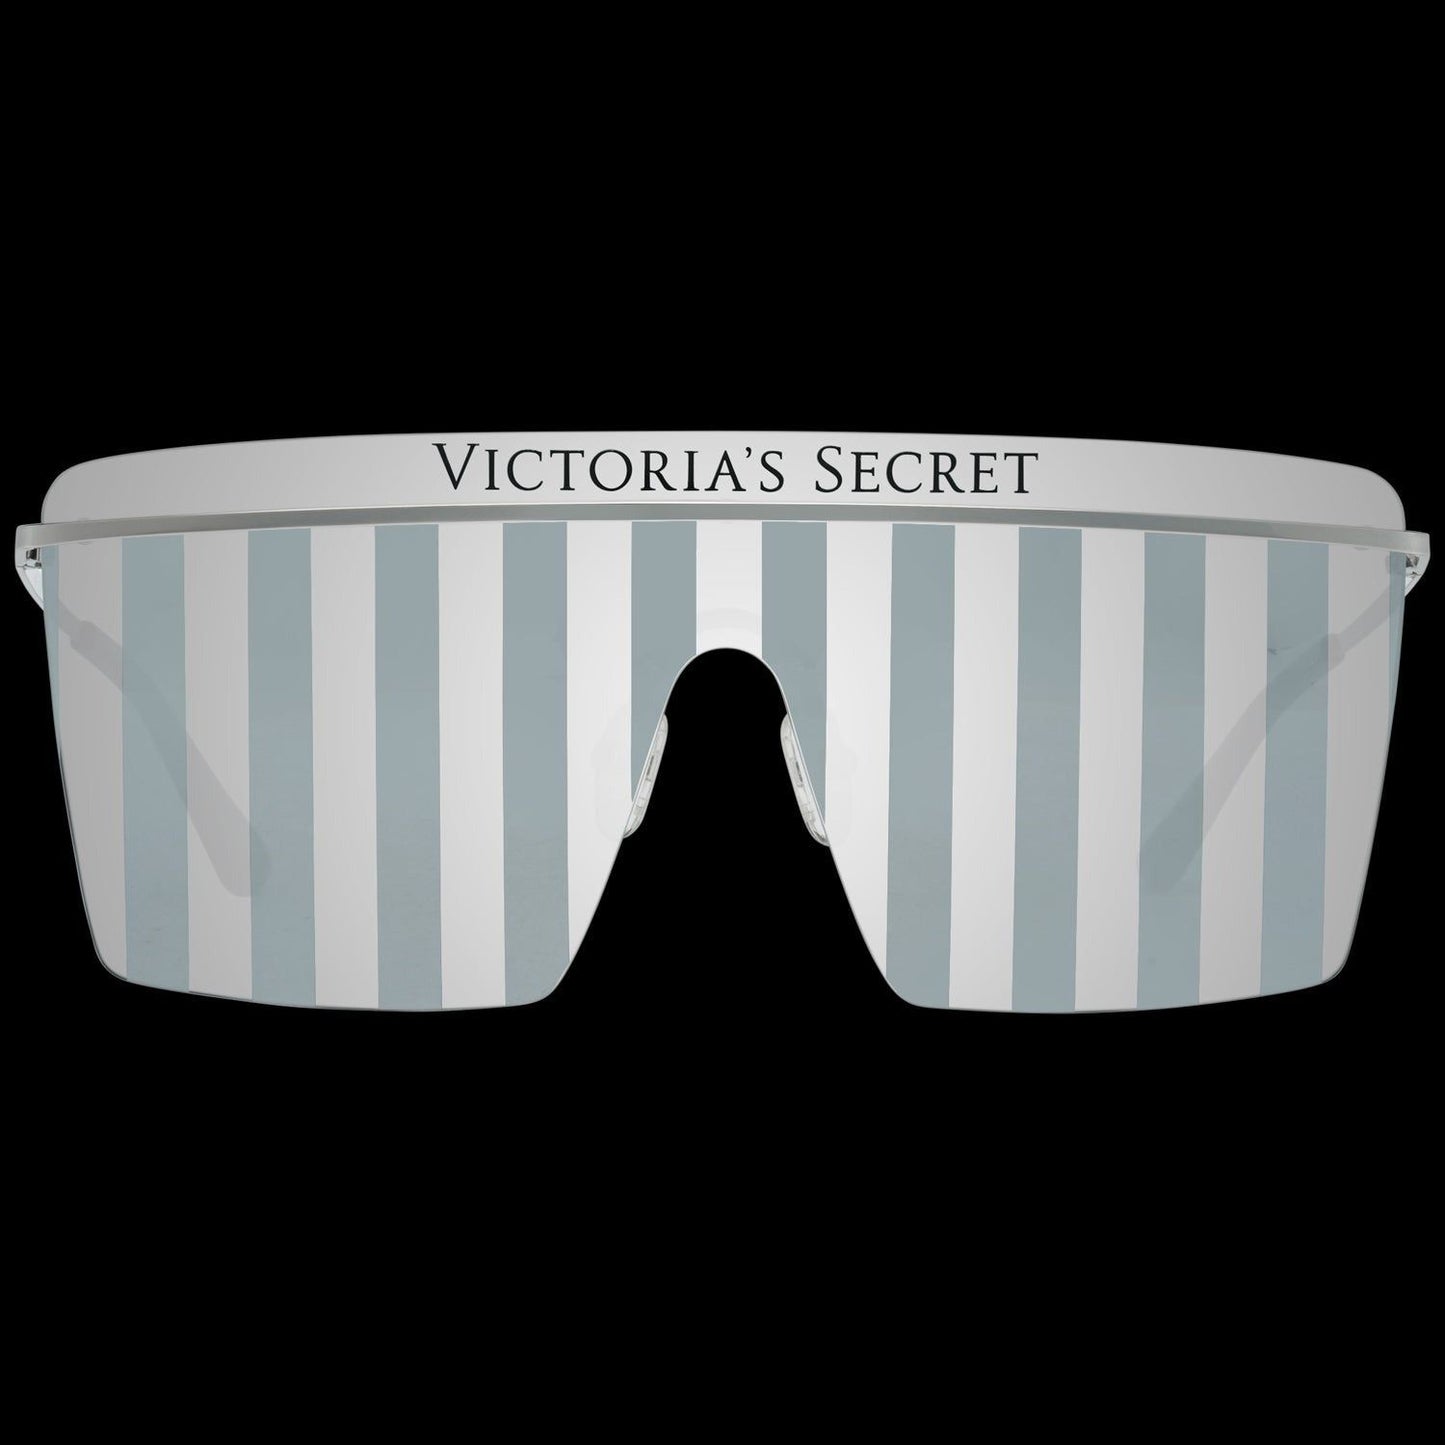 VICTORIA'S SECRET SUNGLASSES VICTORIAS SECRET SUNGLASSES SUNGLASSES & EYEWEAR victorias-secret-sunglasses-9